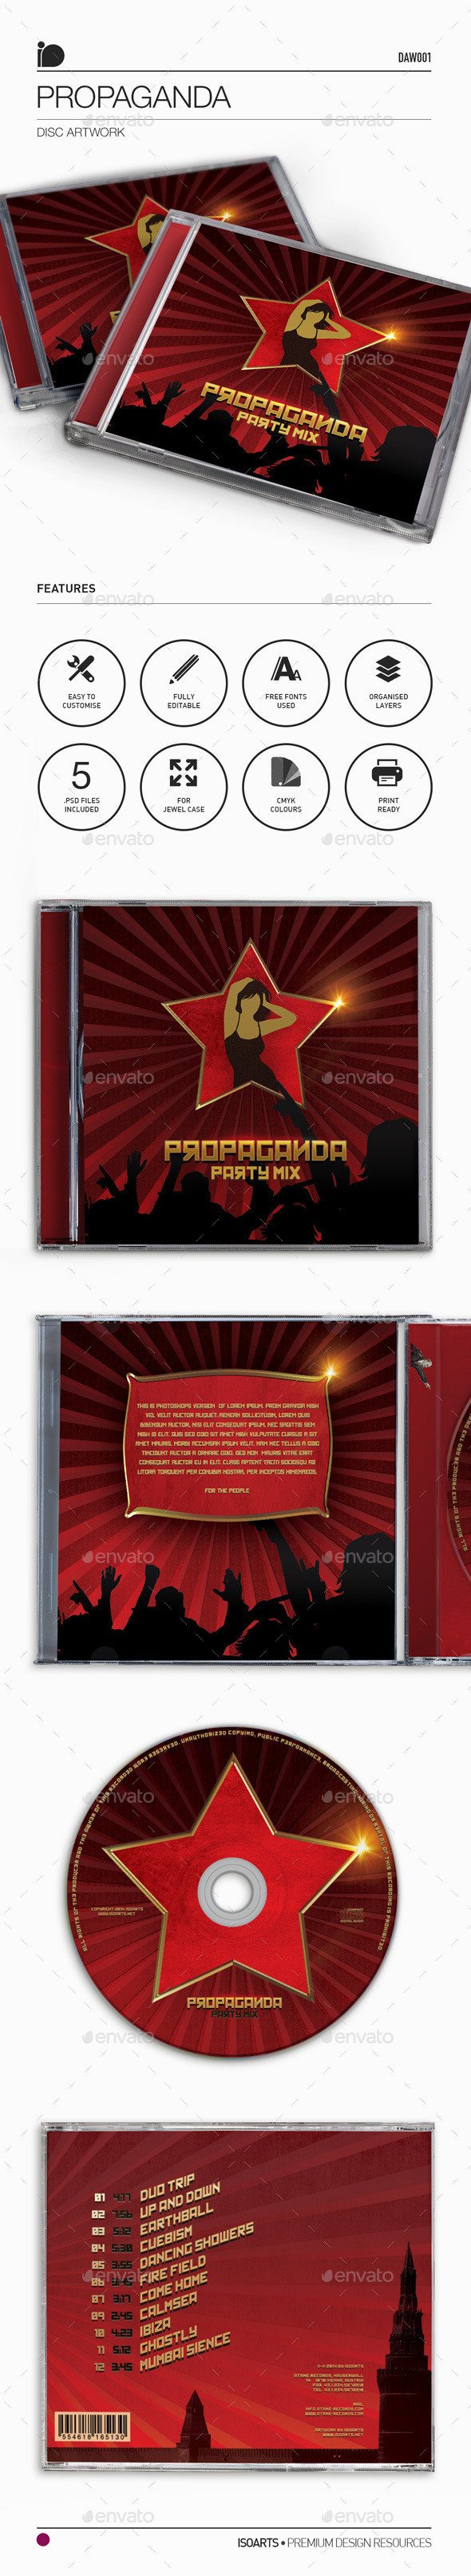 Disc artwork propaganda preview